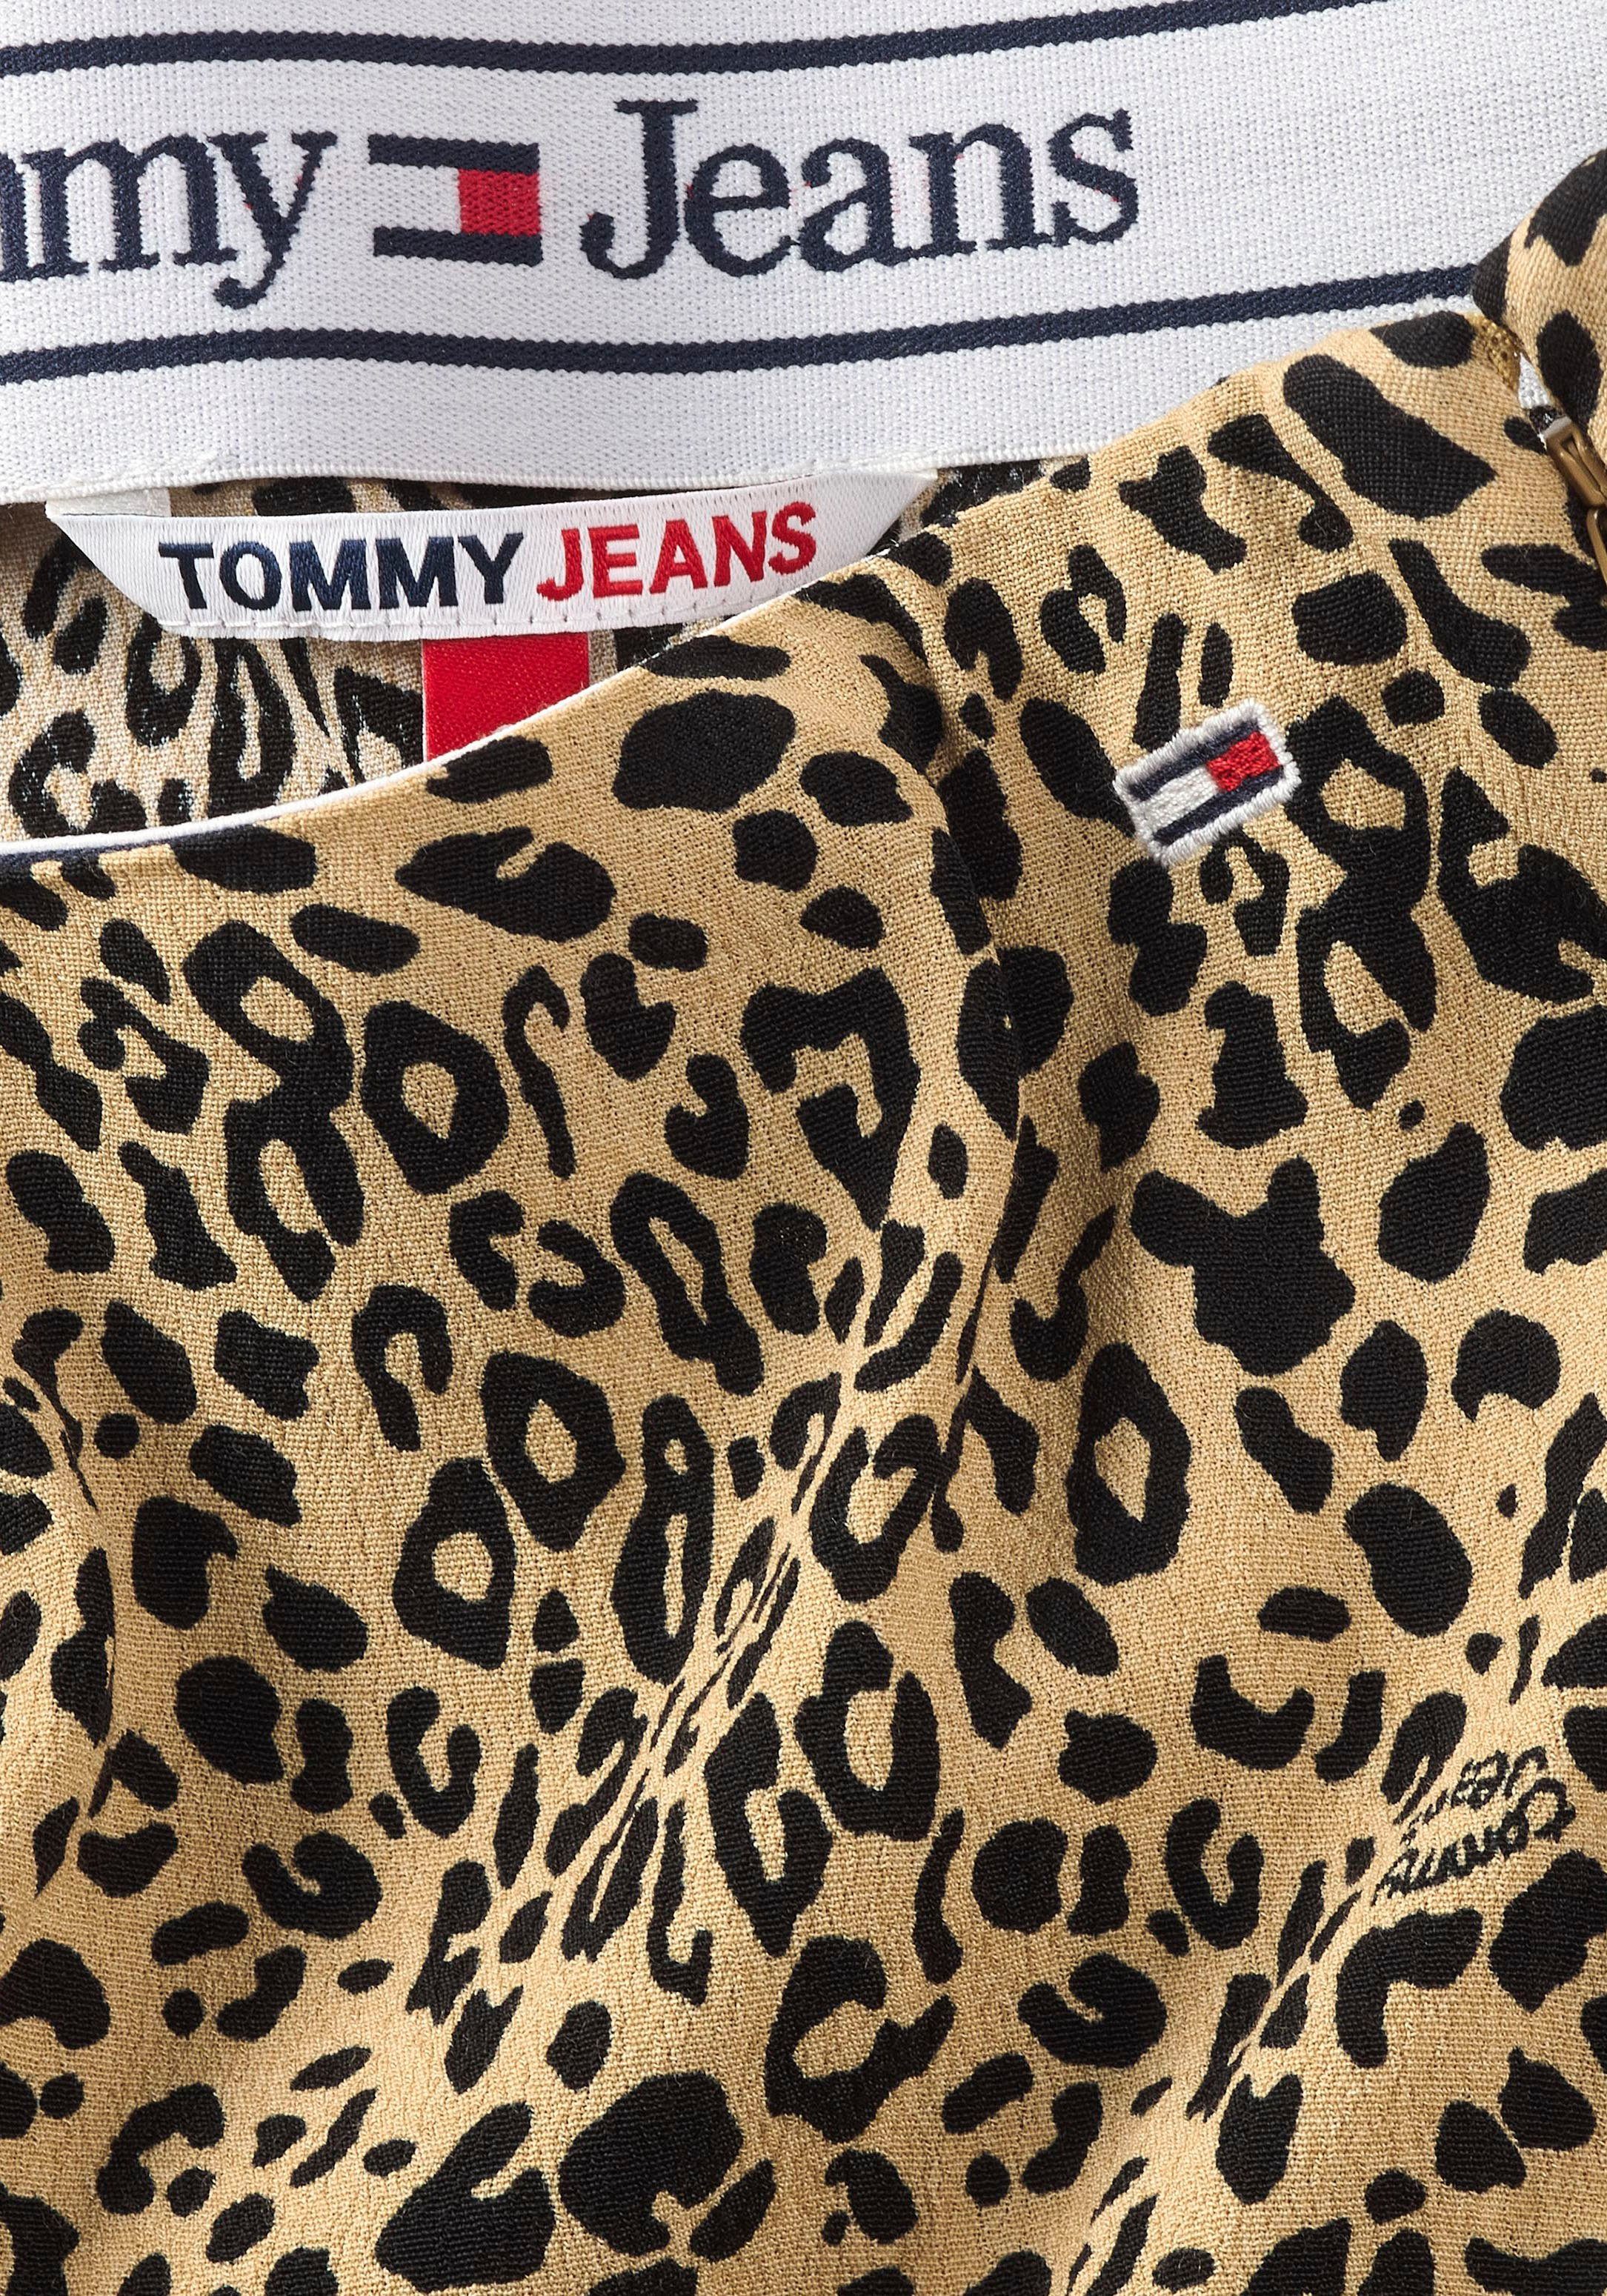 im LEO A-Linien-Rock SKIRT FLARE TJW Tommy Jeans Animal modischem Print